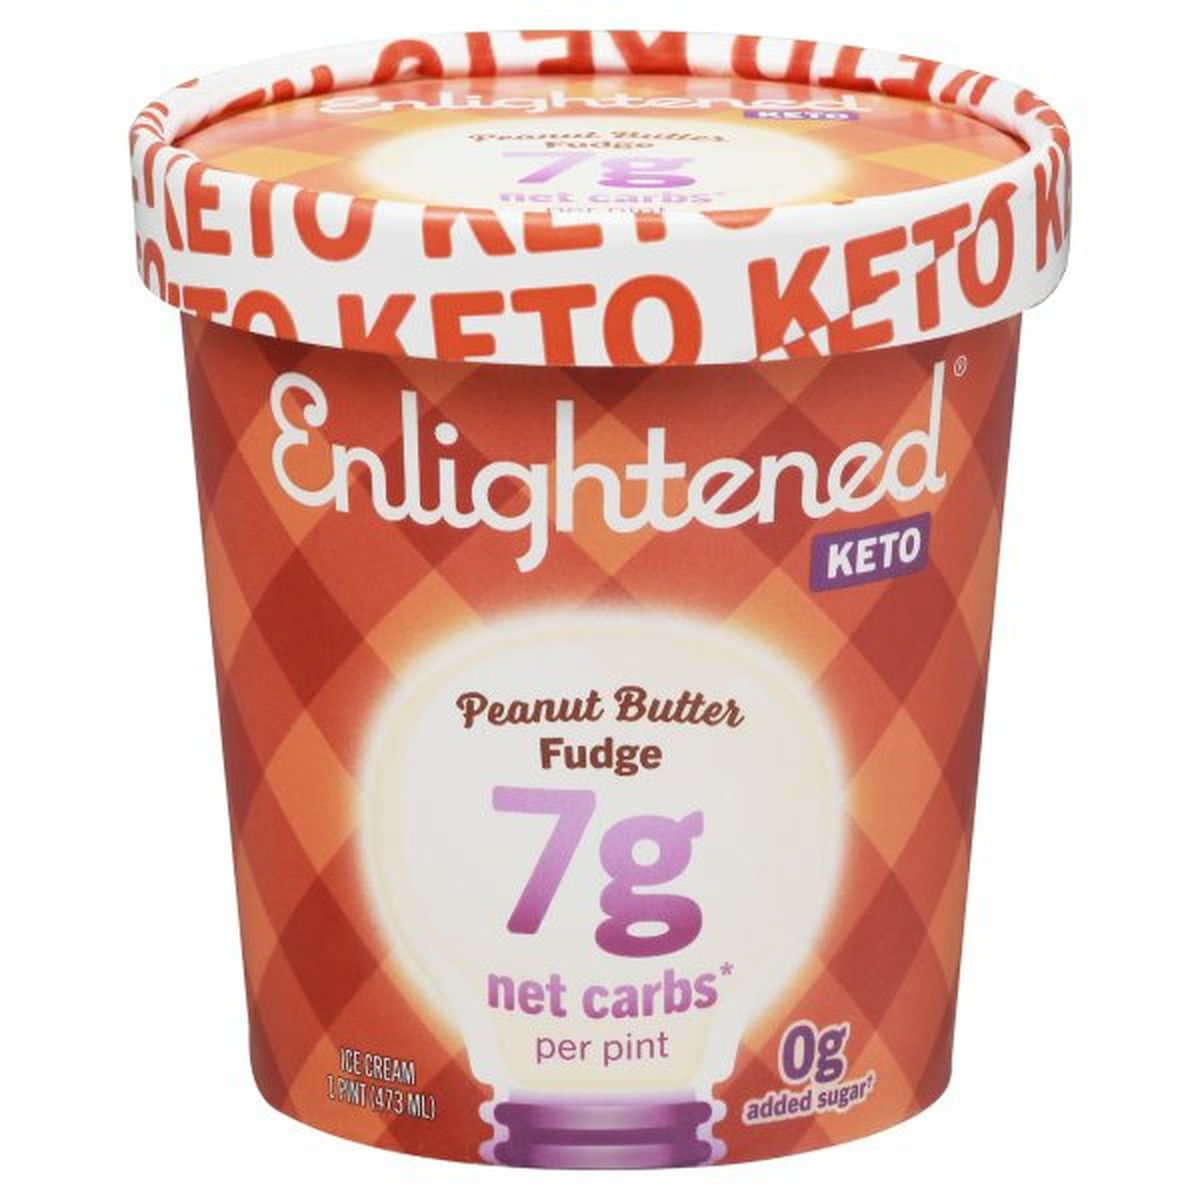 Calories in Enlightened Keto Ice Cream, Keto, Peanut Butter Fudge